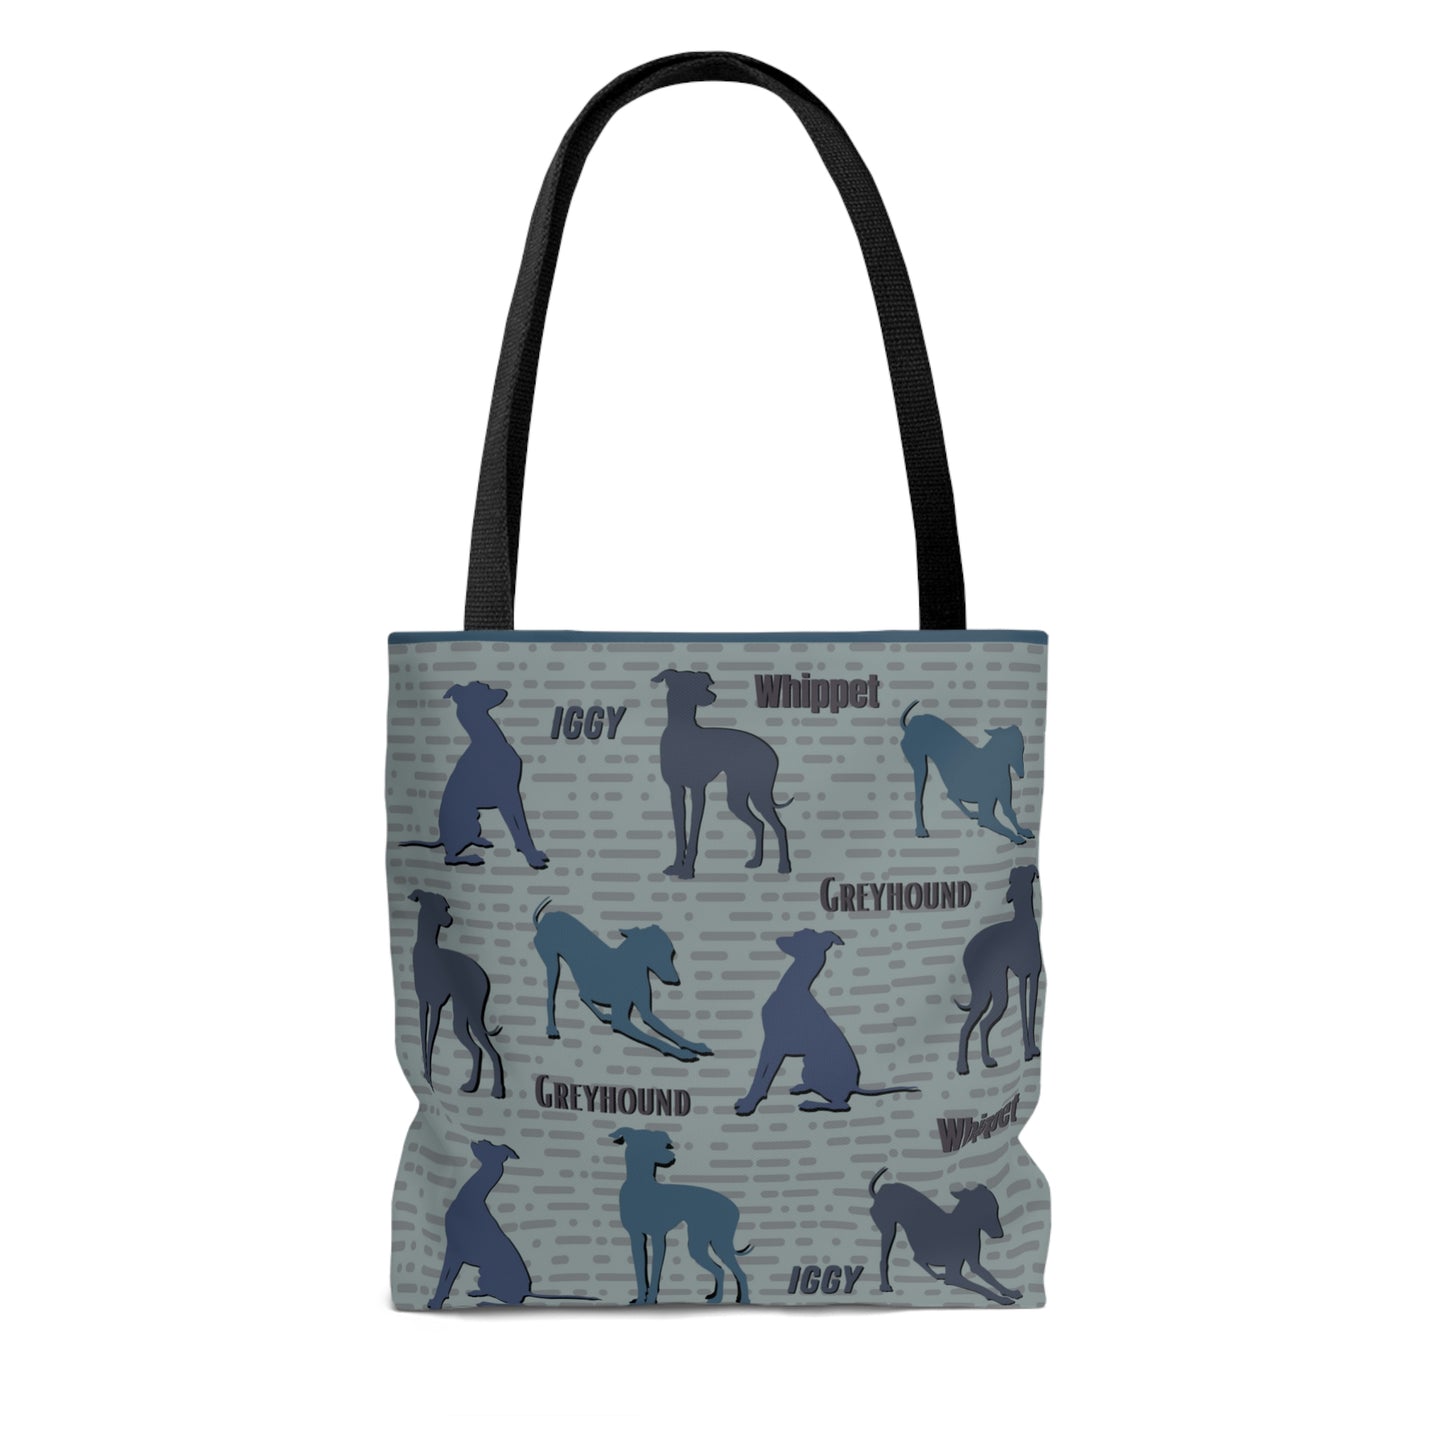 IG, Whippet, Greyhound Tote Bag, Modern, and Practical Bag, Original Design! - The Dapper Dogg